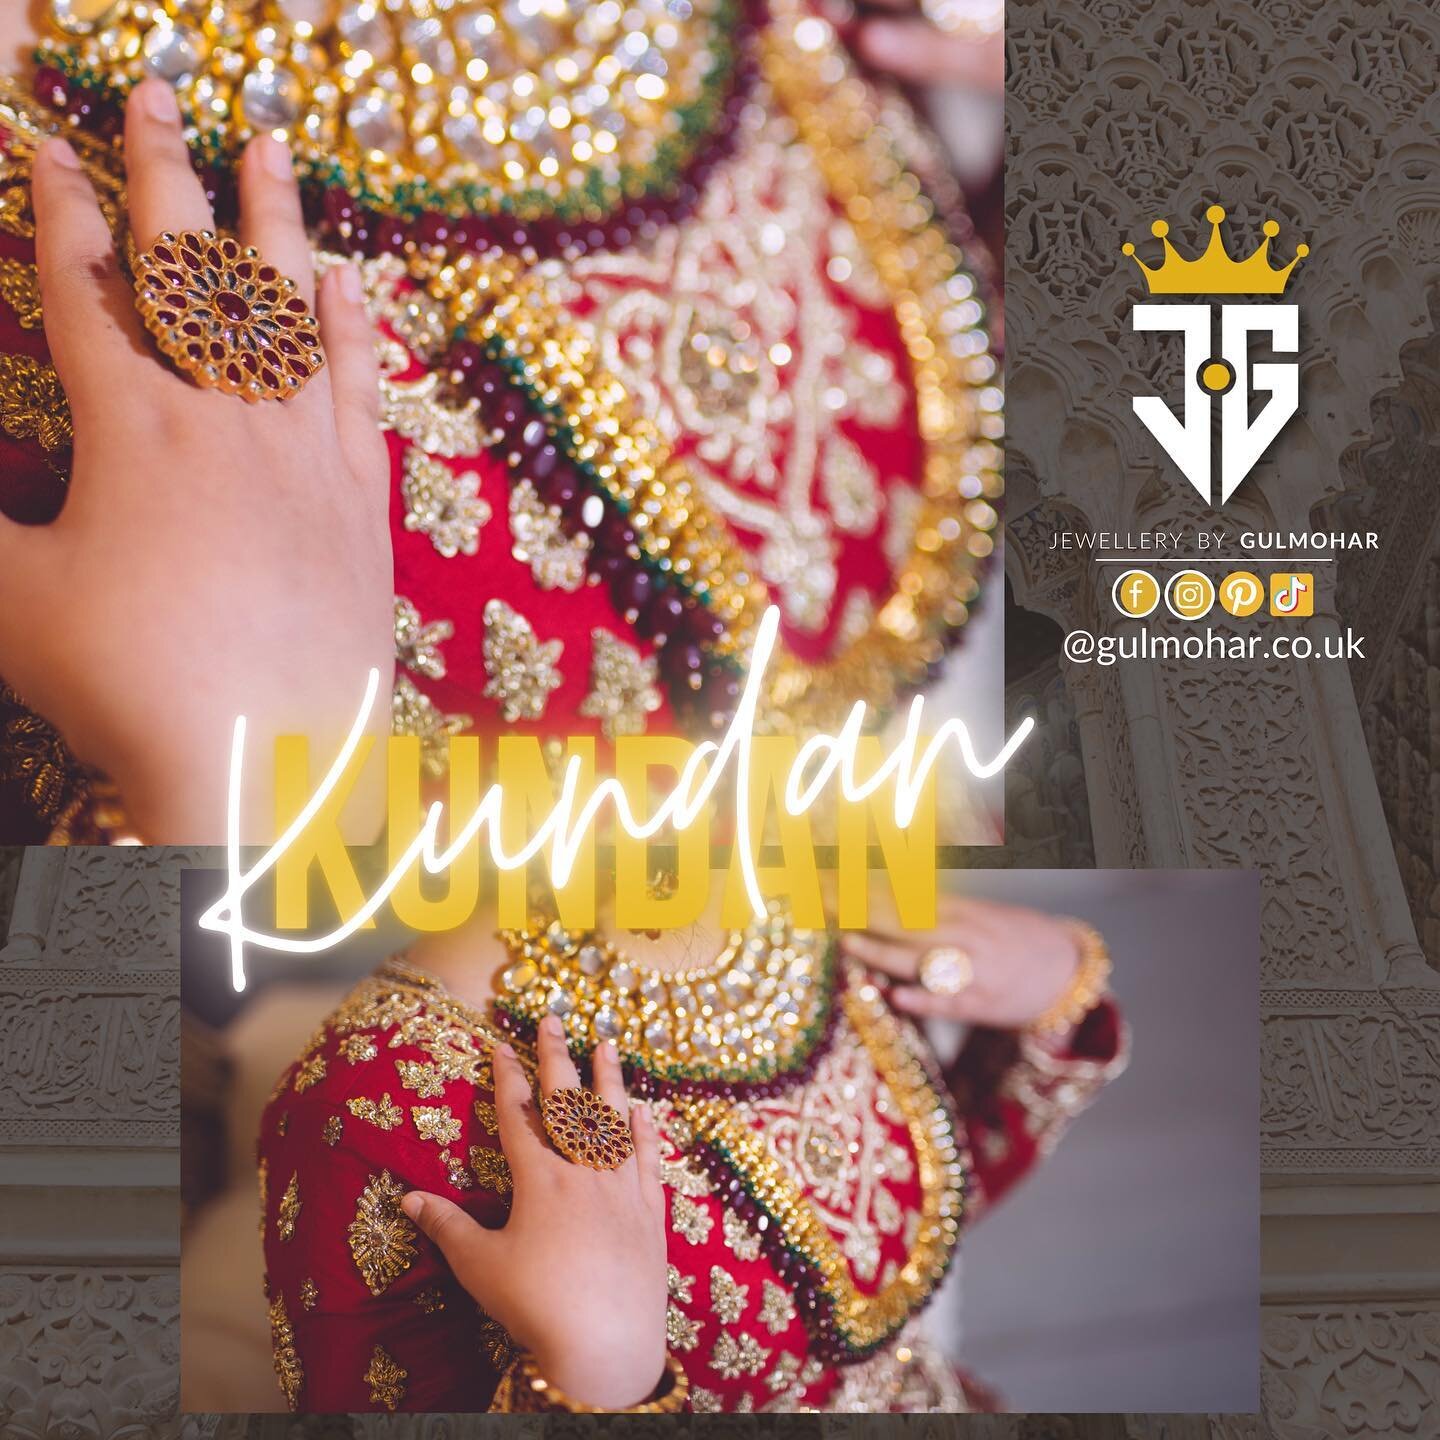 Traditional Premium Kundan With Unique Modern Designs Only At Jewellery By Gulmohar.
.
.

#kundan #kundanjewellery #jewellery #earrings #indianjewellery #bridaljewellery #bangles #jewelry #indianbride #necklace #wedding #polki #fashion #indianwedding